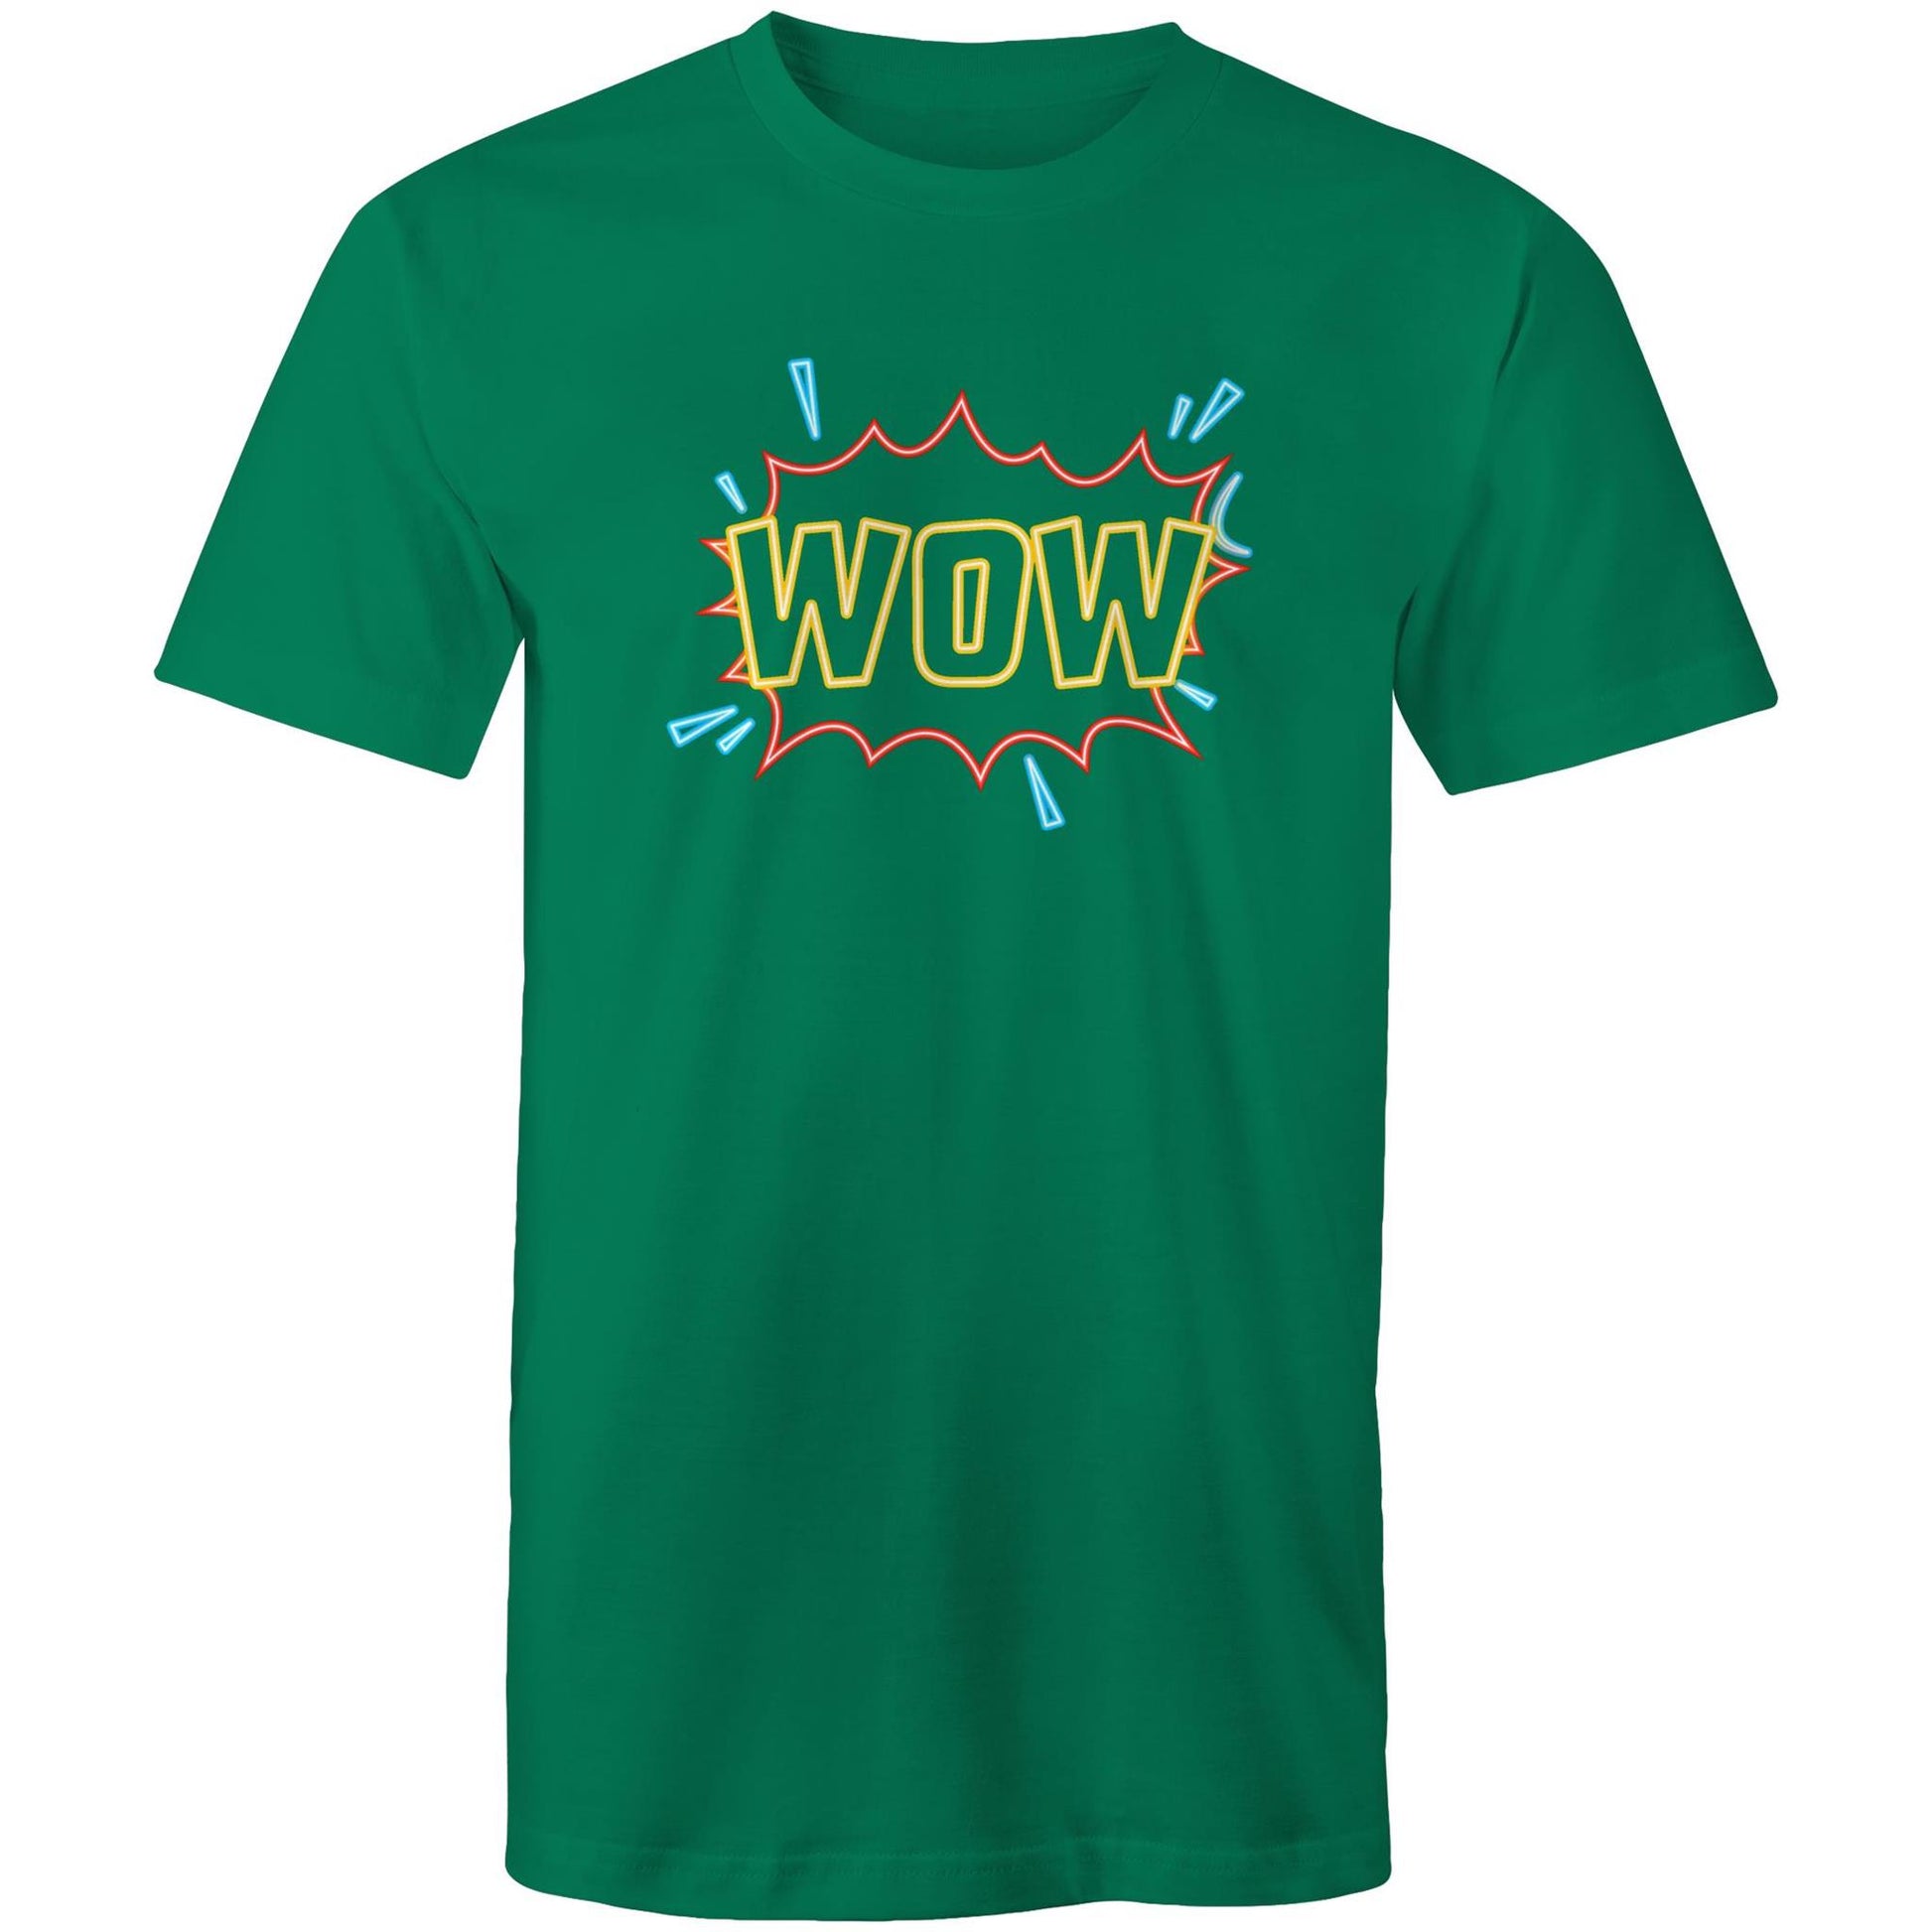 Wow, Comic Book - Mens T-Shirt Kelly Green Mens T-shirt comic